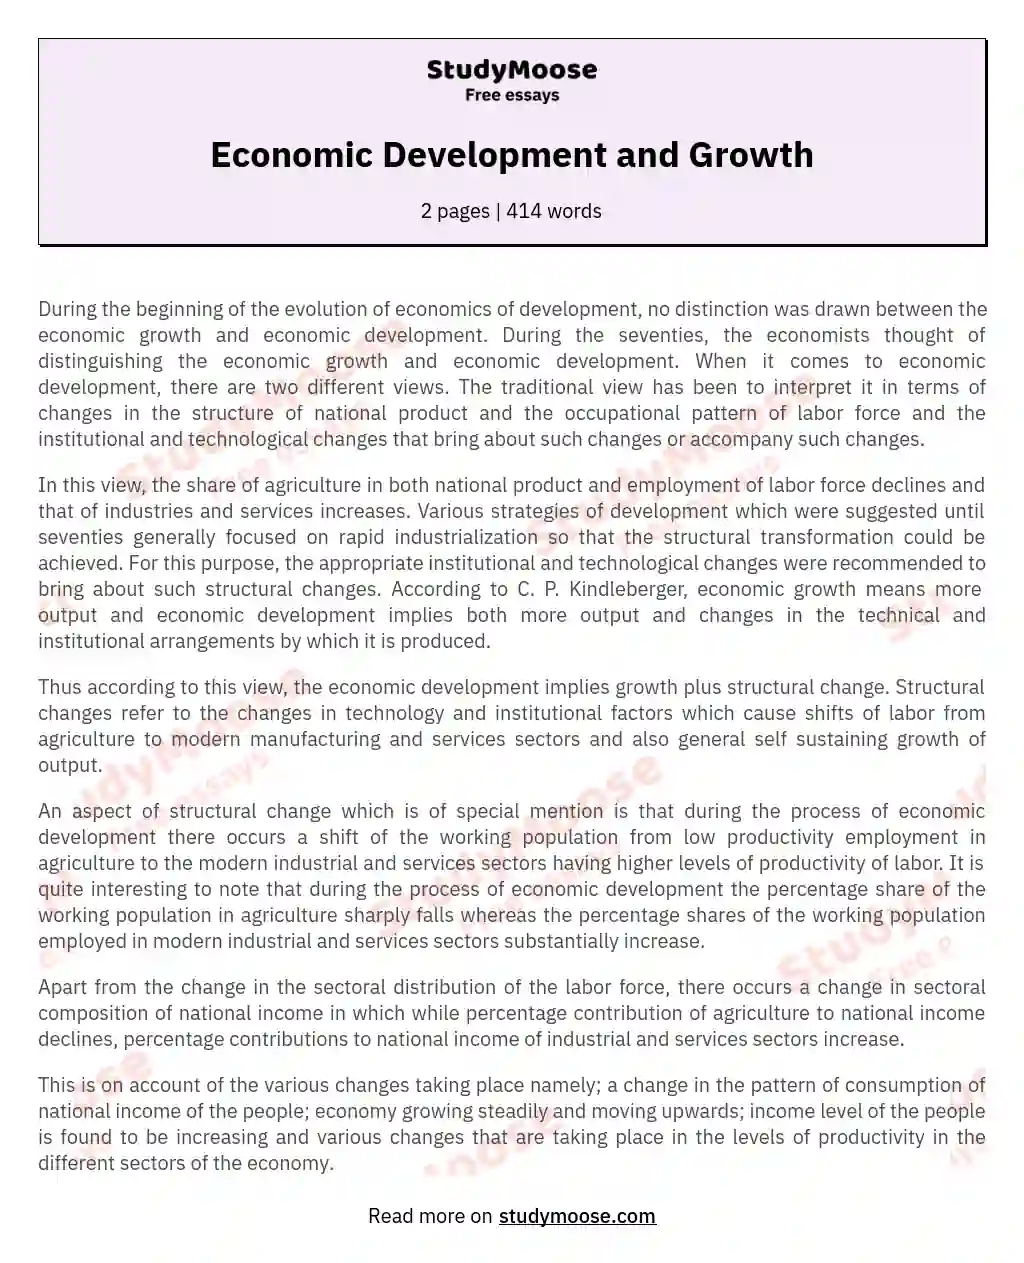 Economic Development and Growth essay